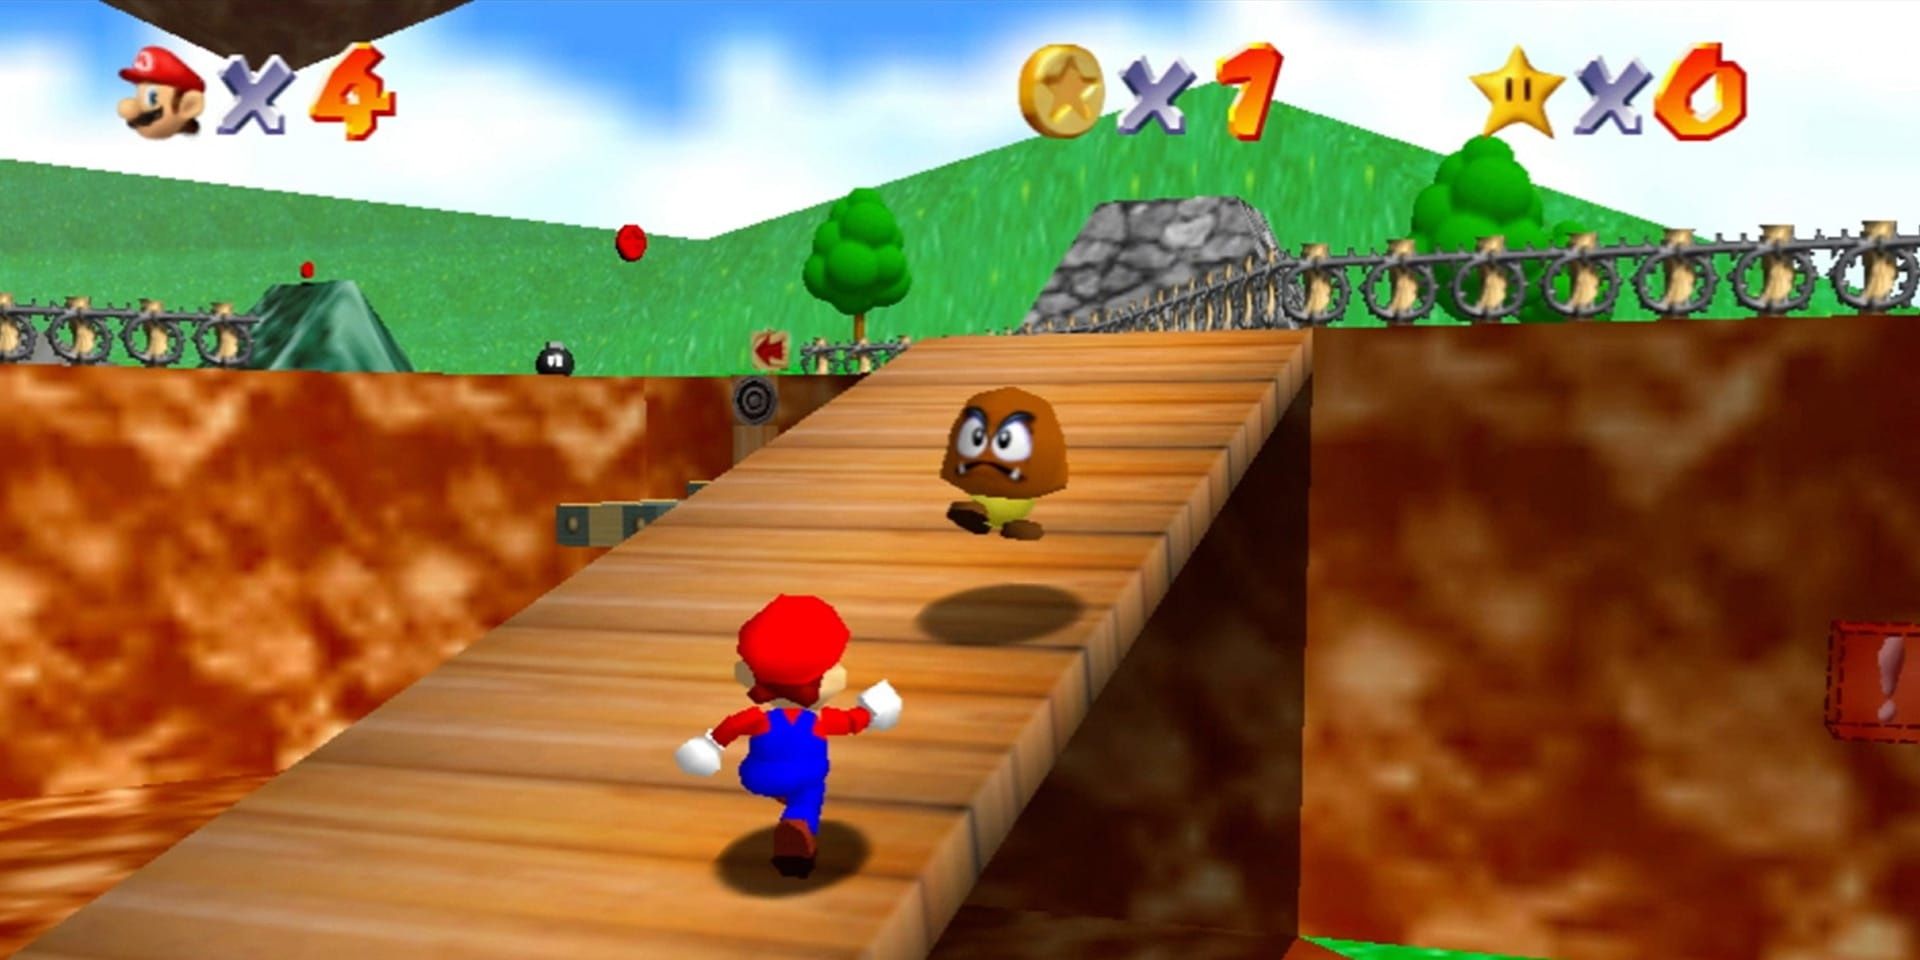 Mario fighting a Goomba at Bob-omb Battlefield in Super Mario 64